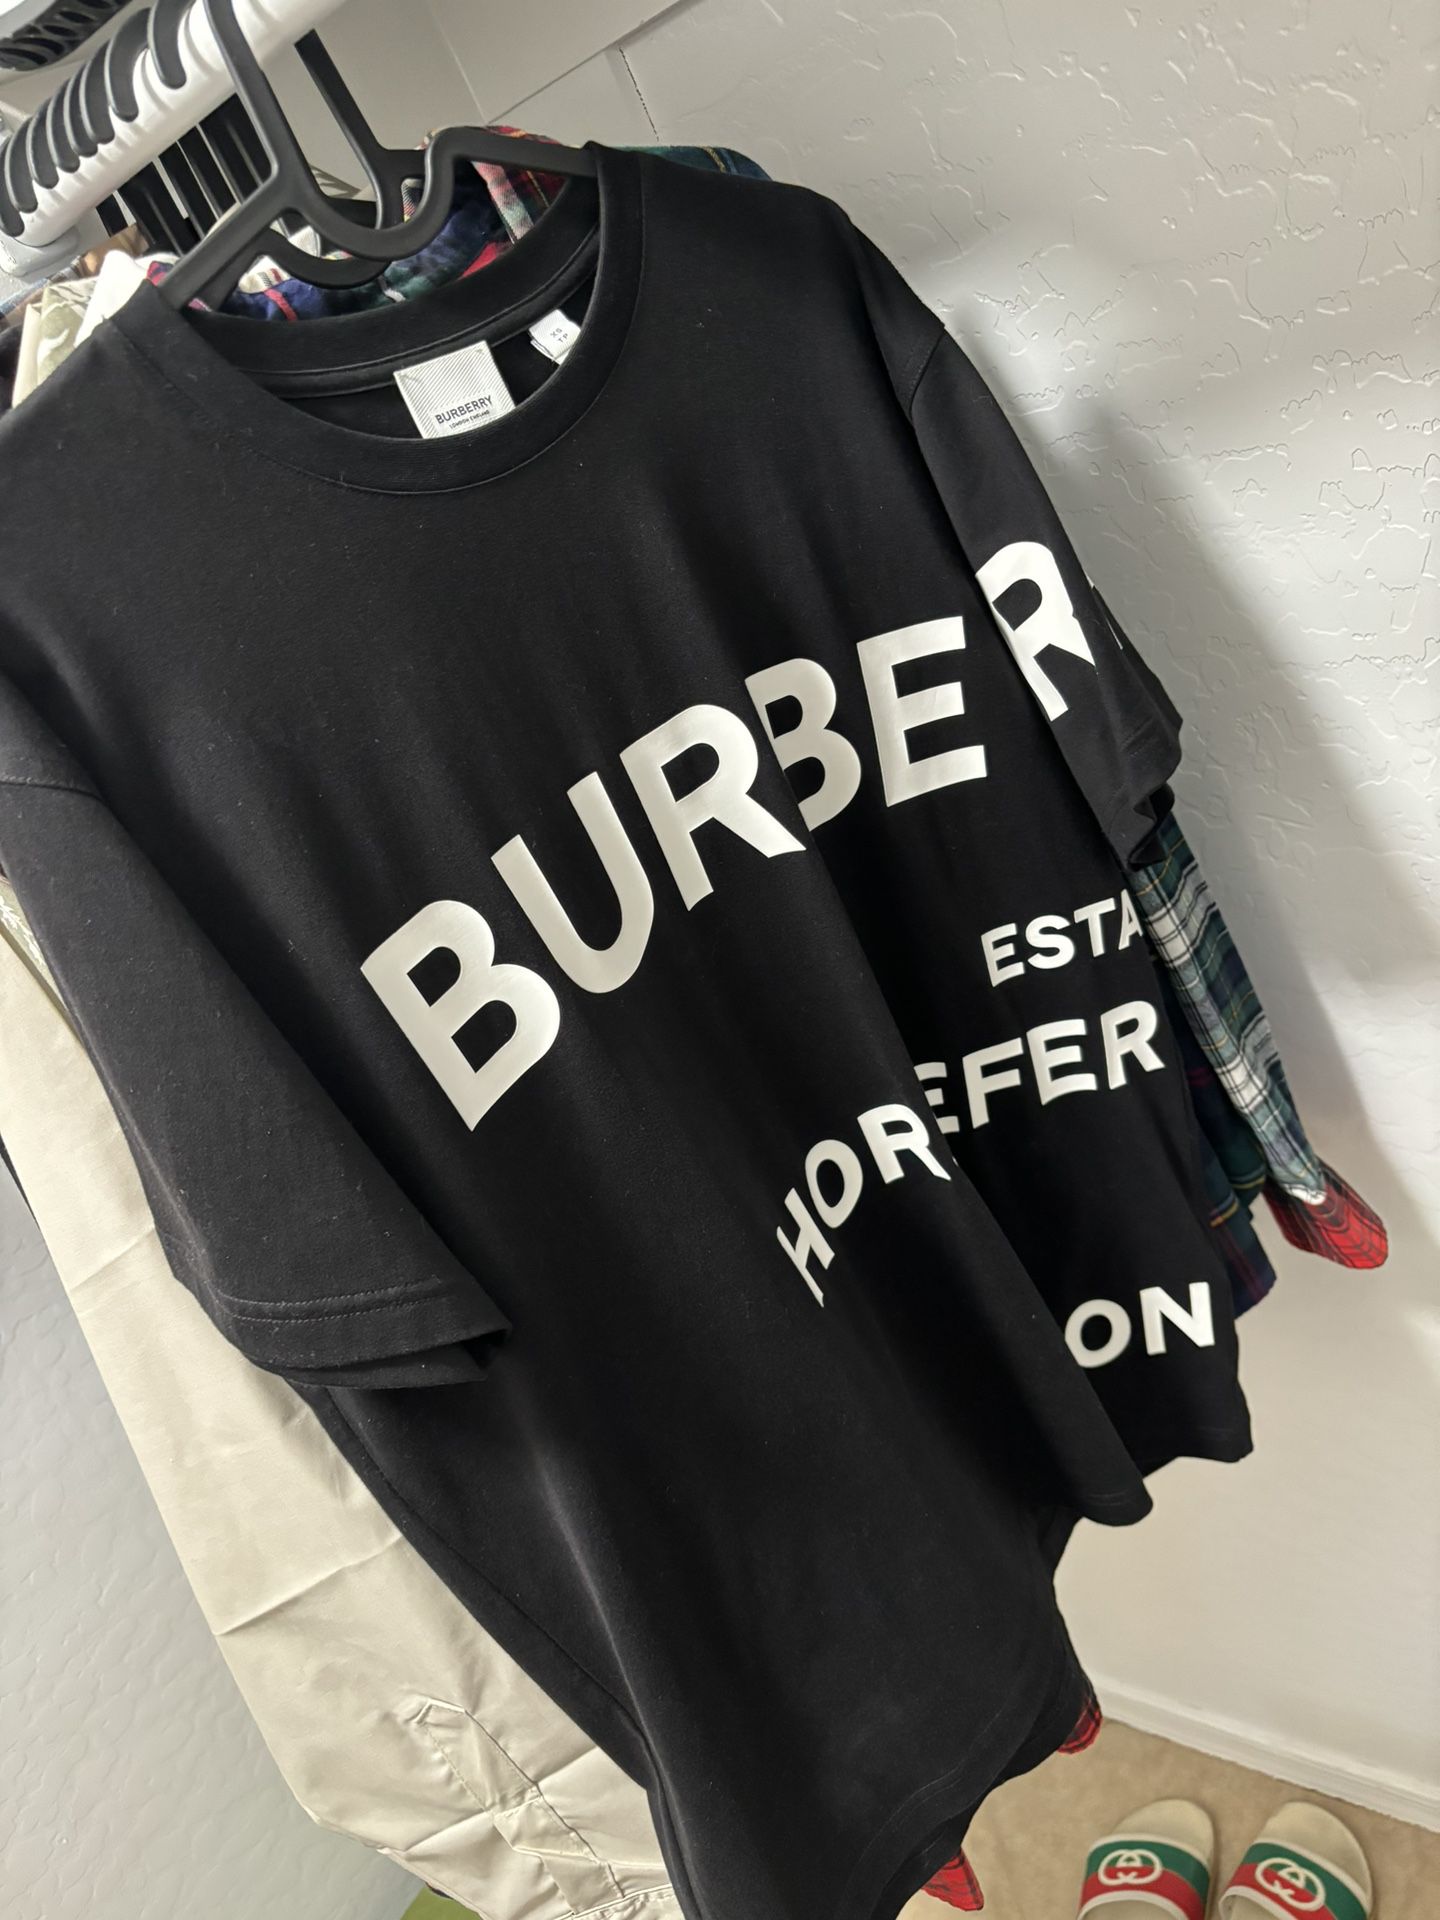 Burberry Shirt 